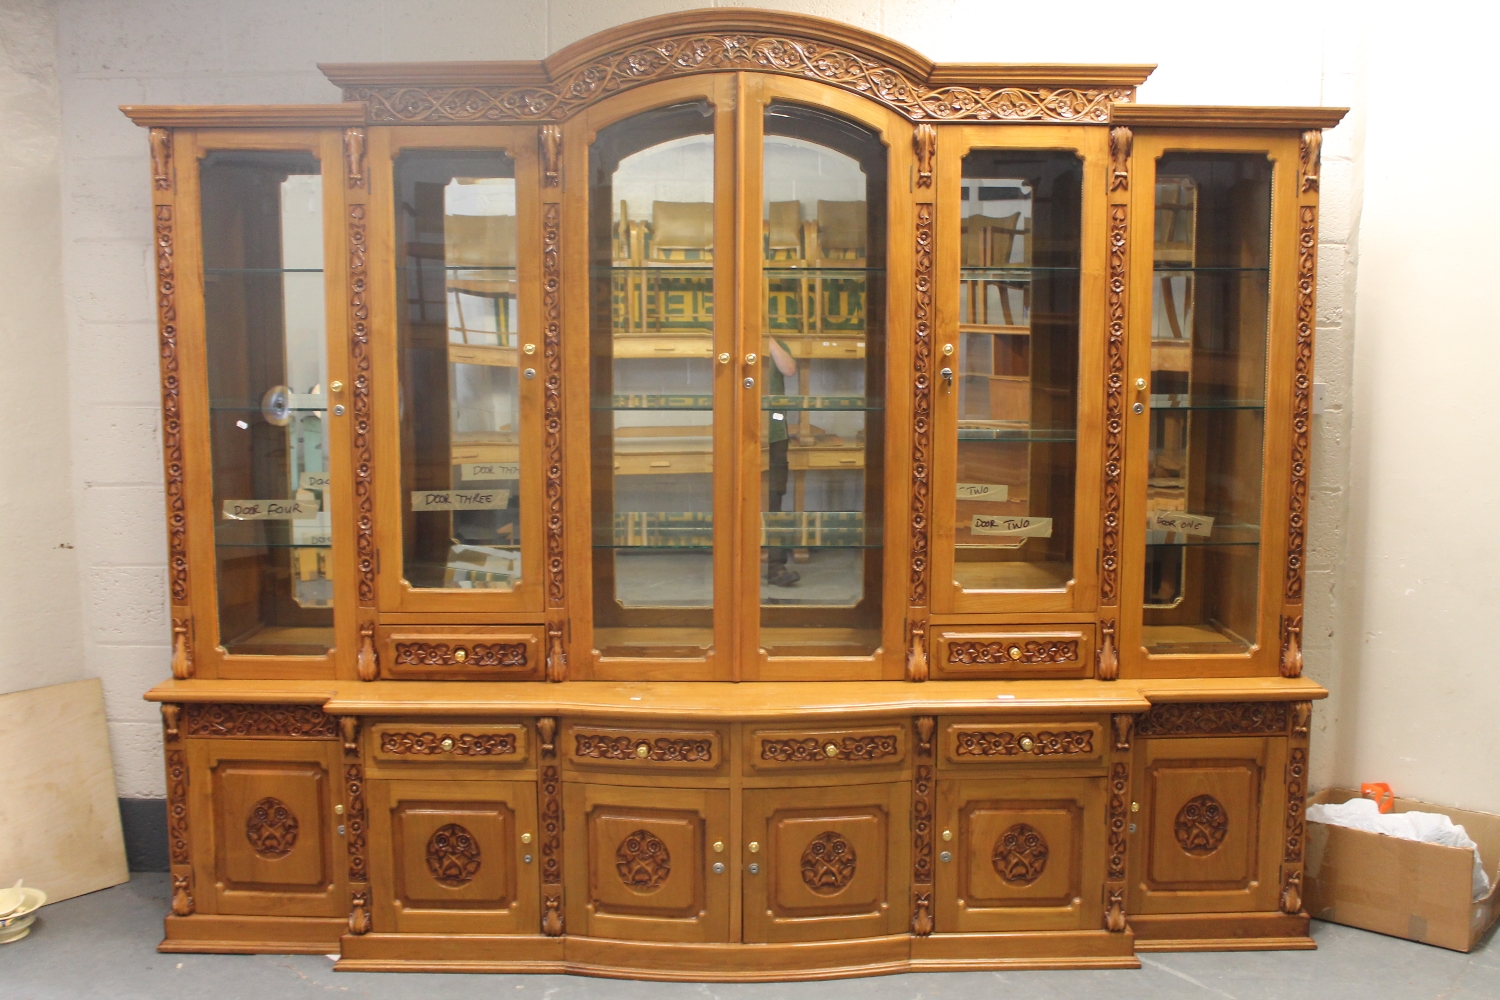 An impressive oriental style high gloss glazed, breakfront bookcase,